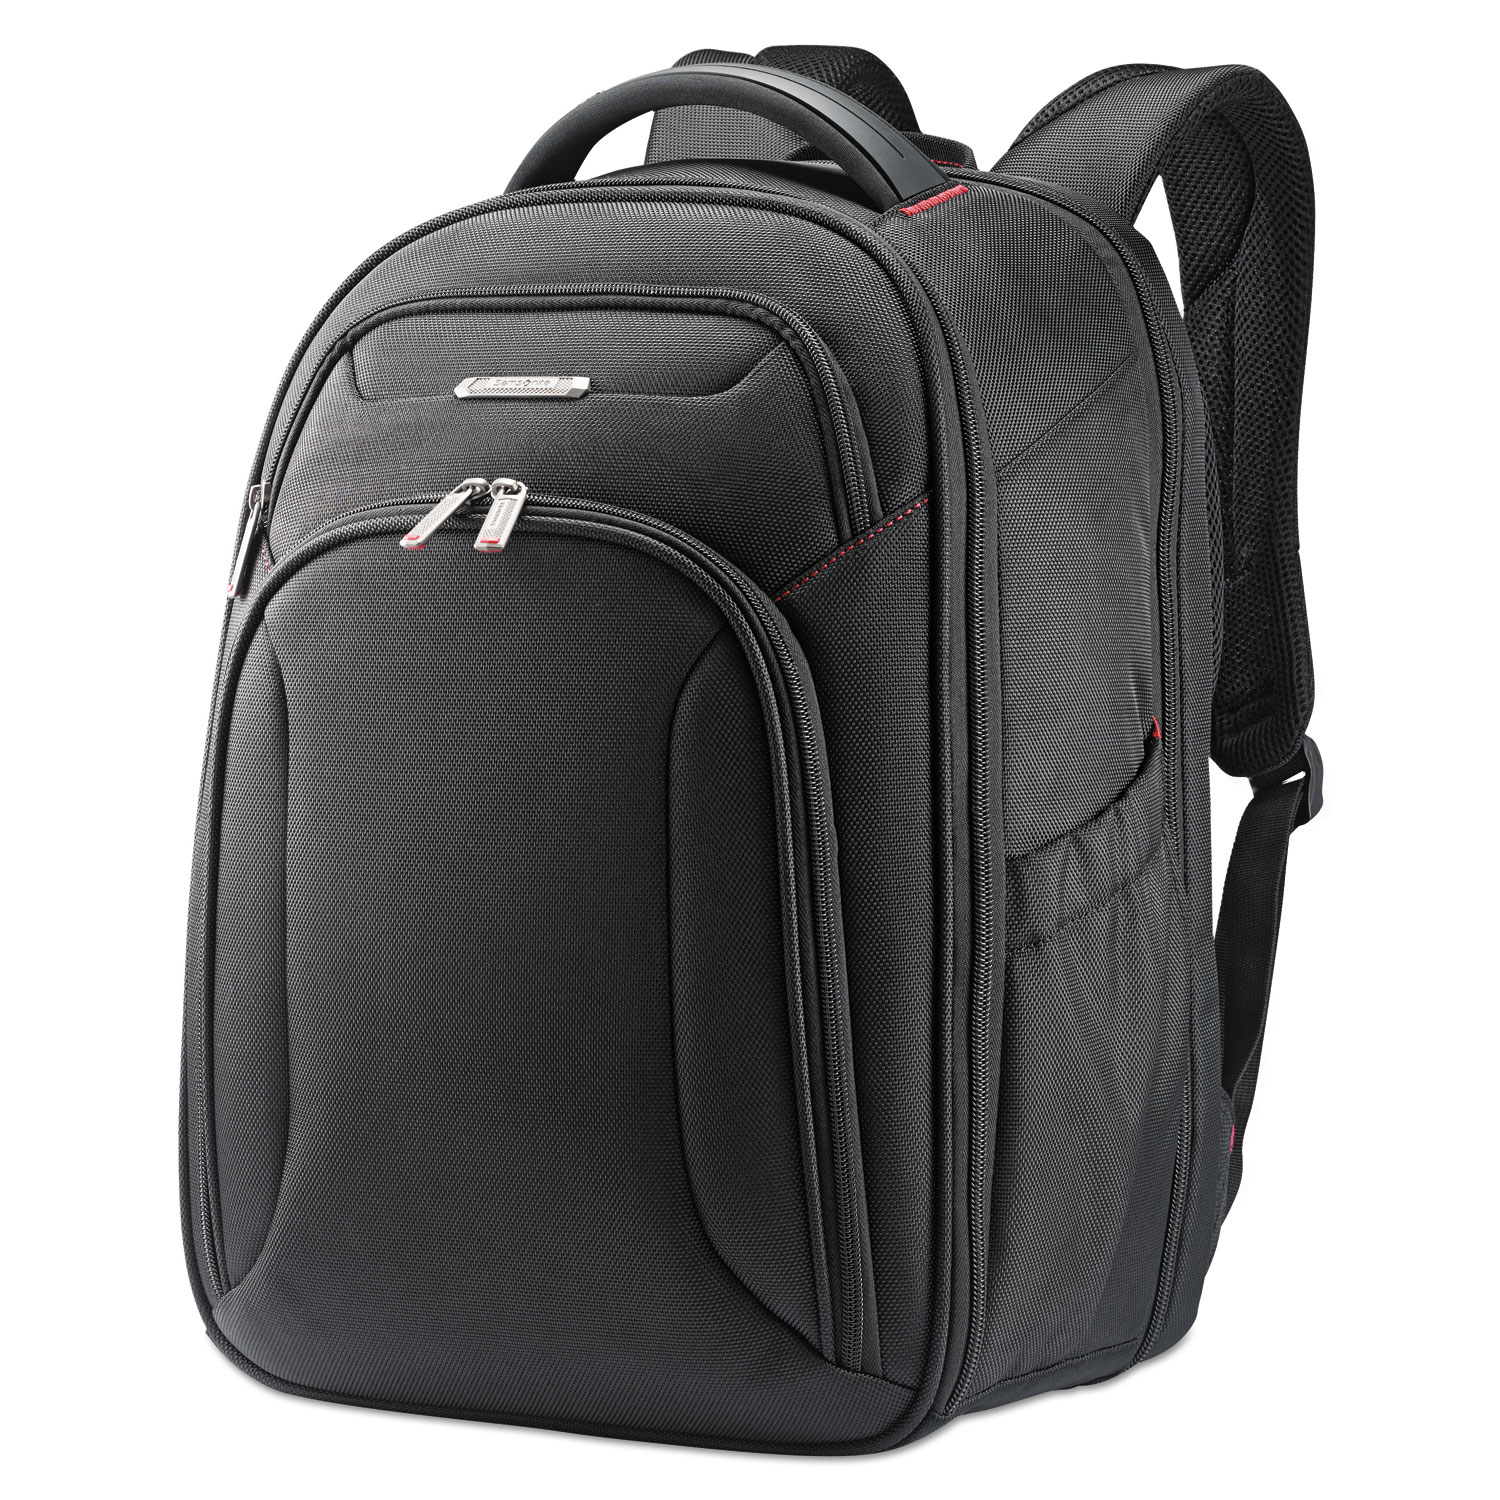 Xenon 3 Laptop Backpack, 12 x 8 x 17.5, Ballistic Polyester, Black